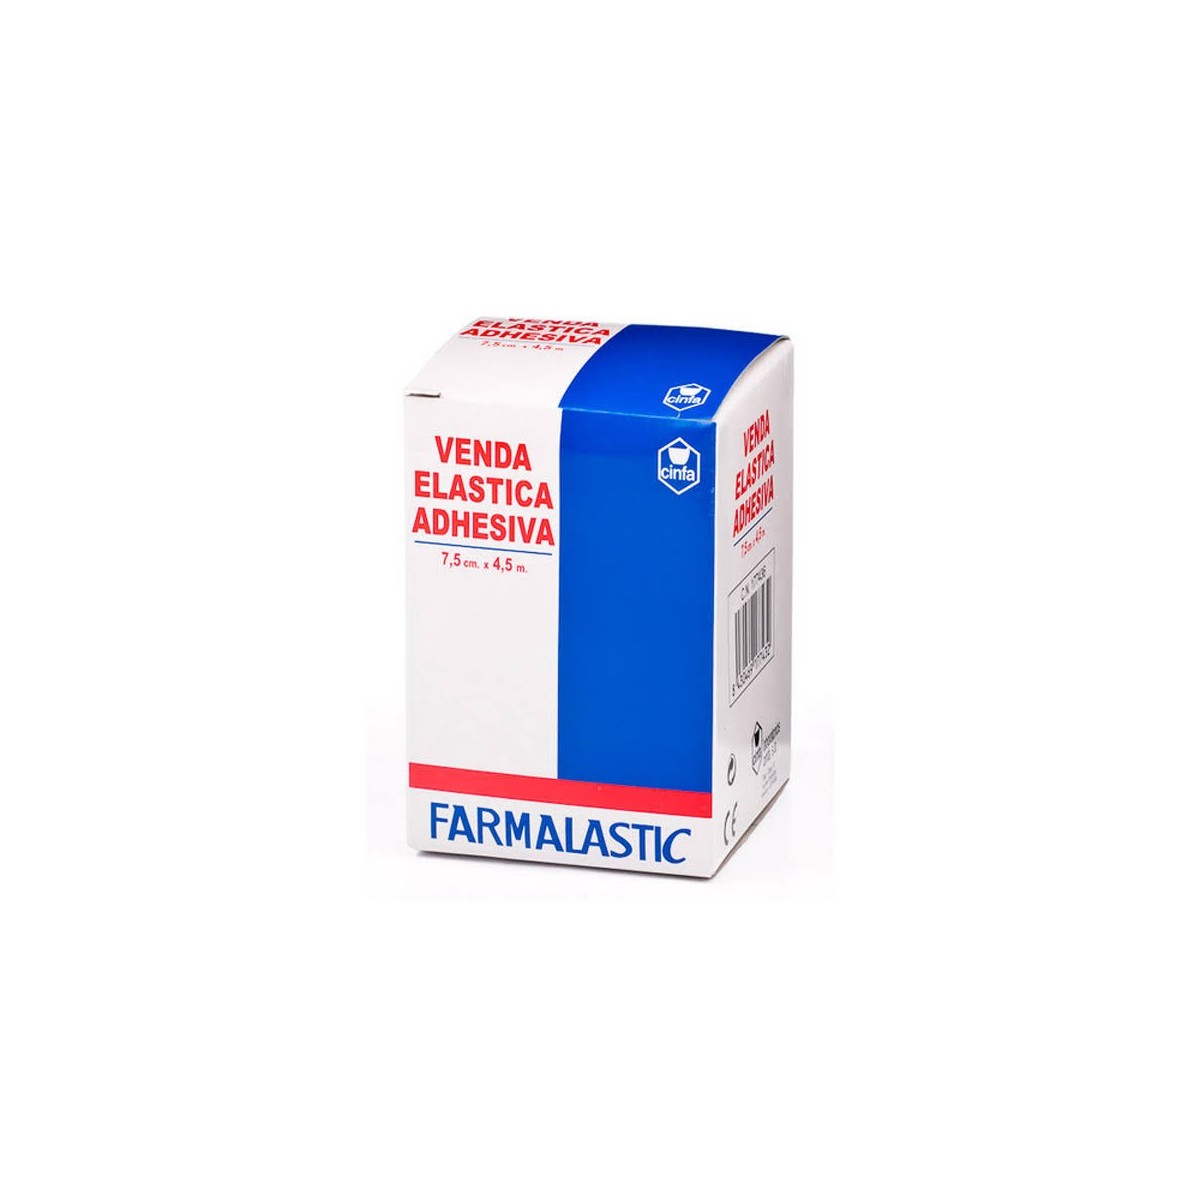 venda-elastica-adhesiva-farmalastic-45-x-75